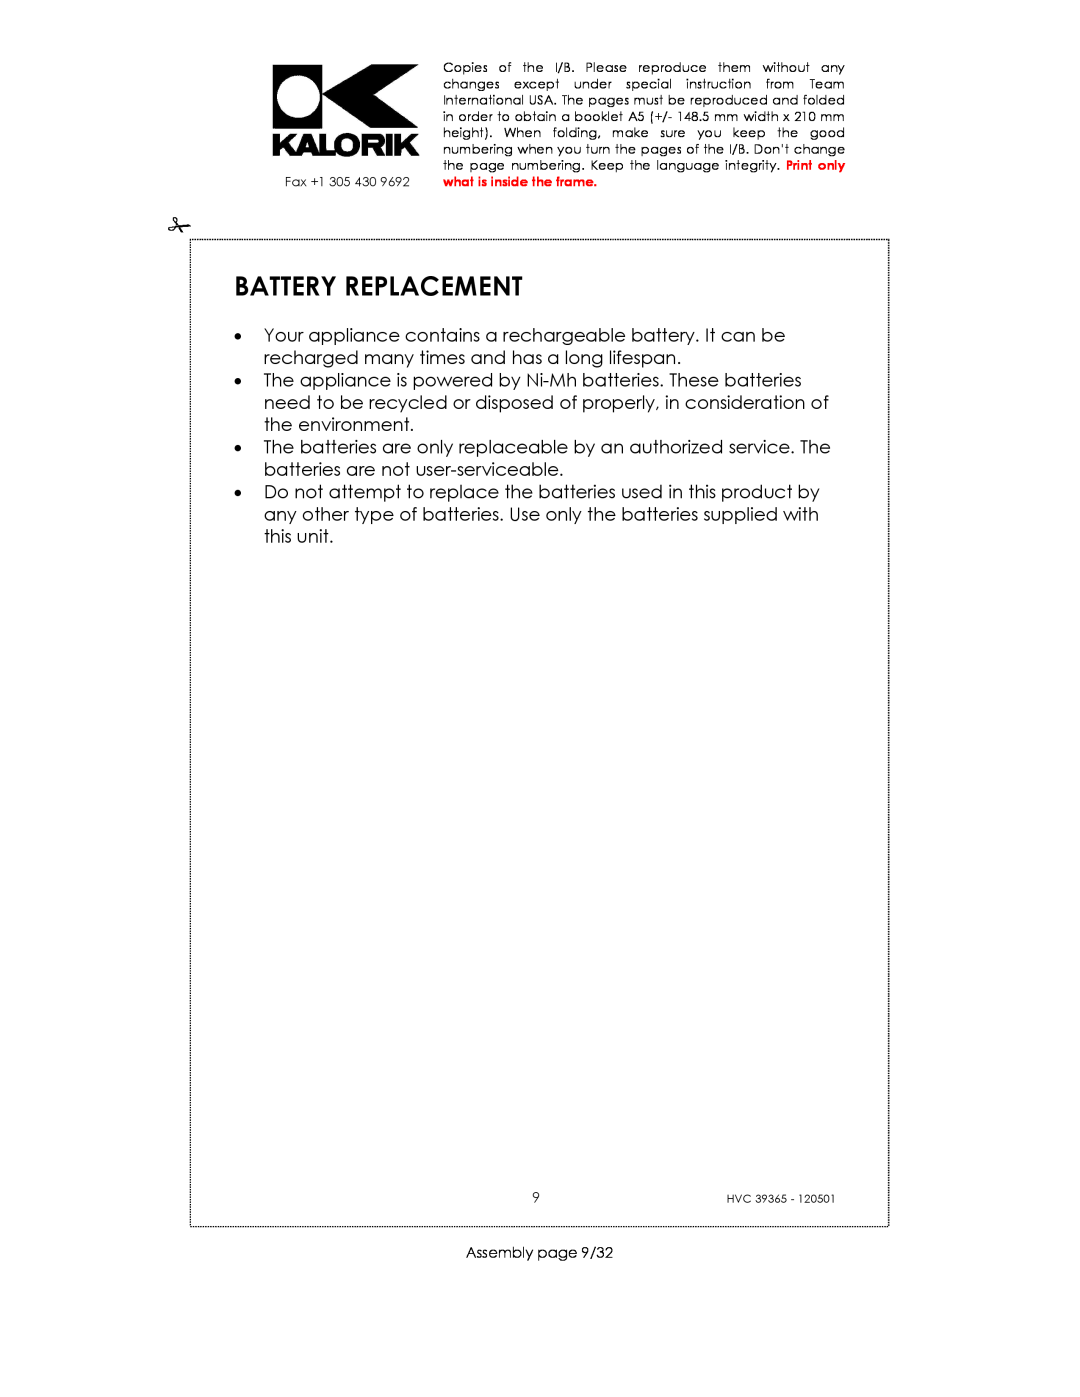 Kalorik HVC 39365 manual Battery Replacement, Assembly page 9/32 